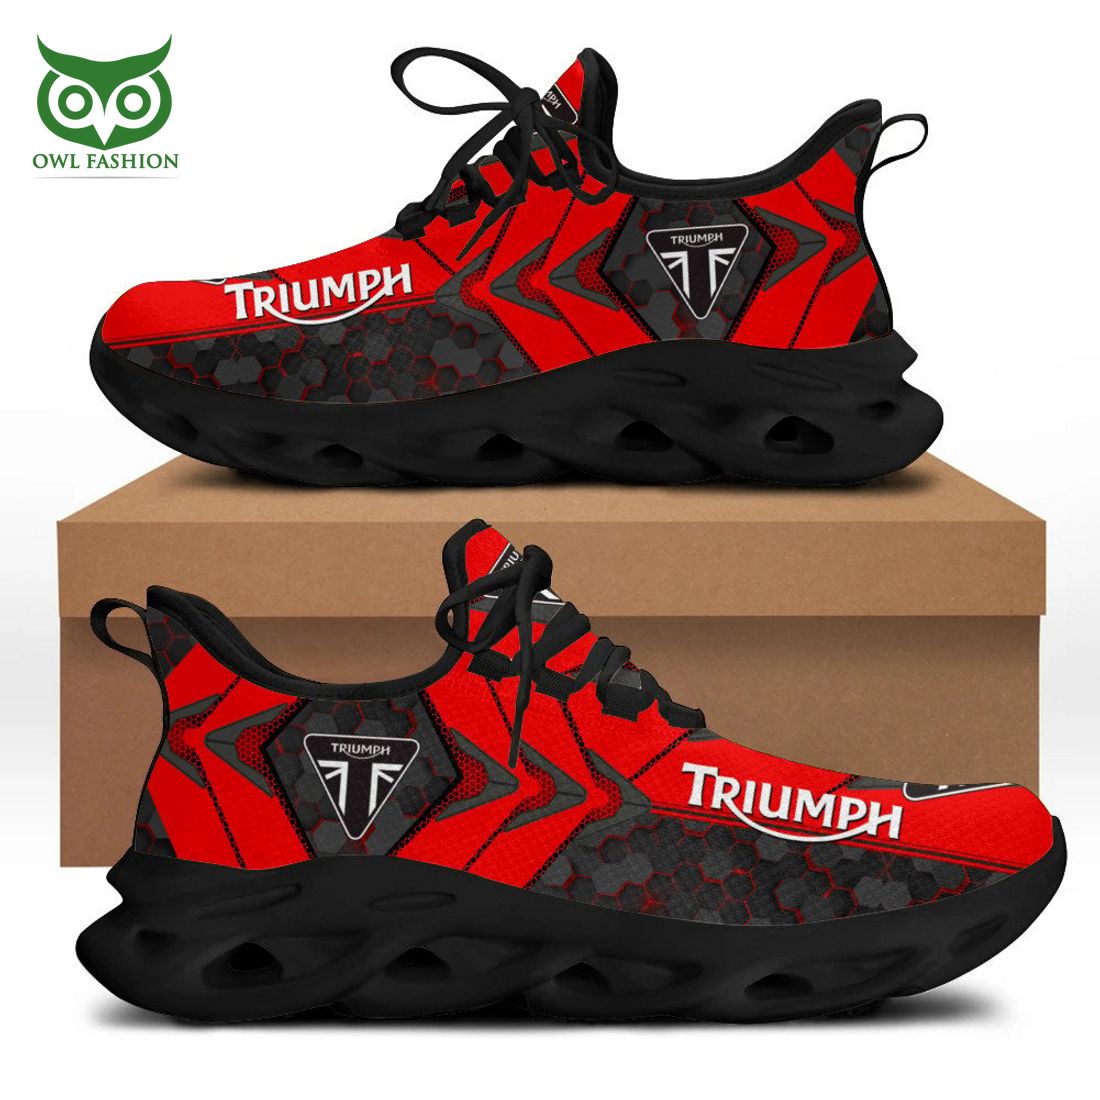 triumph red arrow black max soul sneakers 1 0nXXU